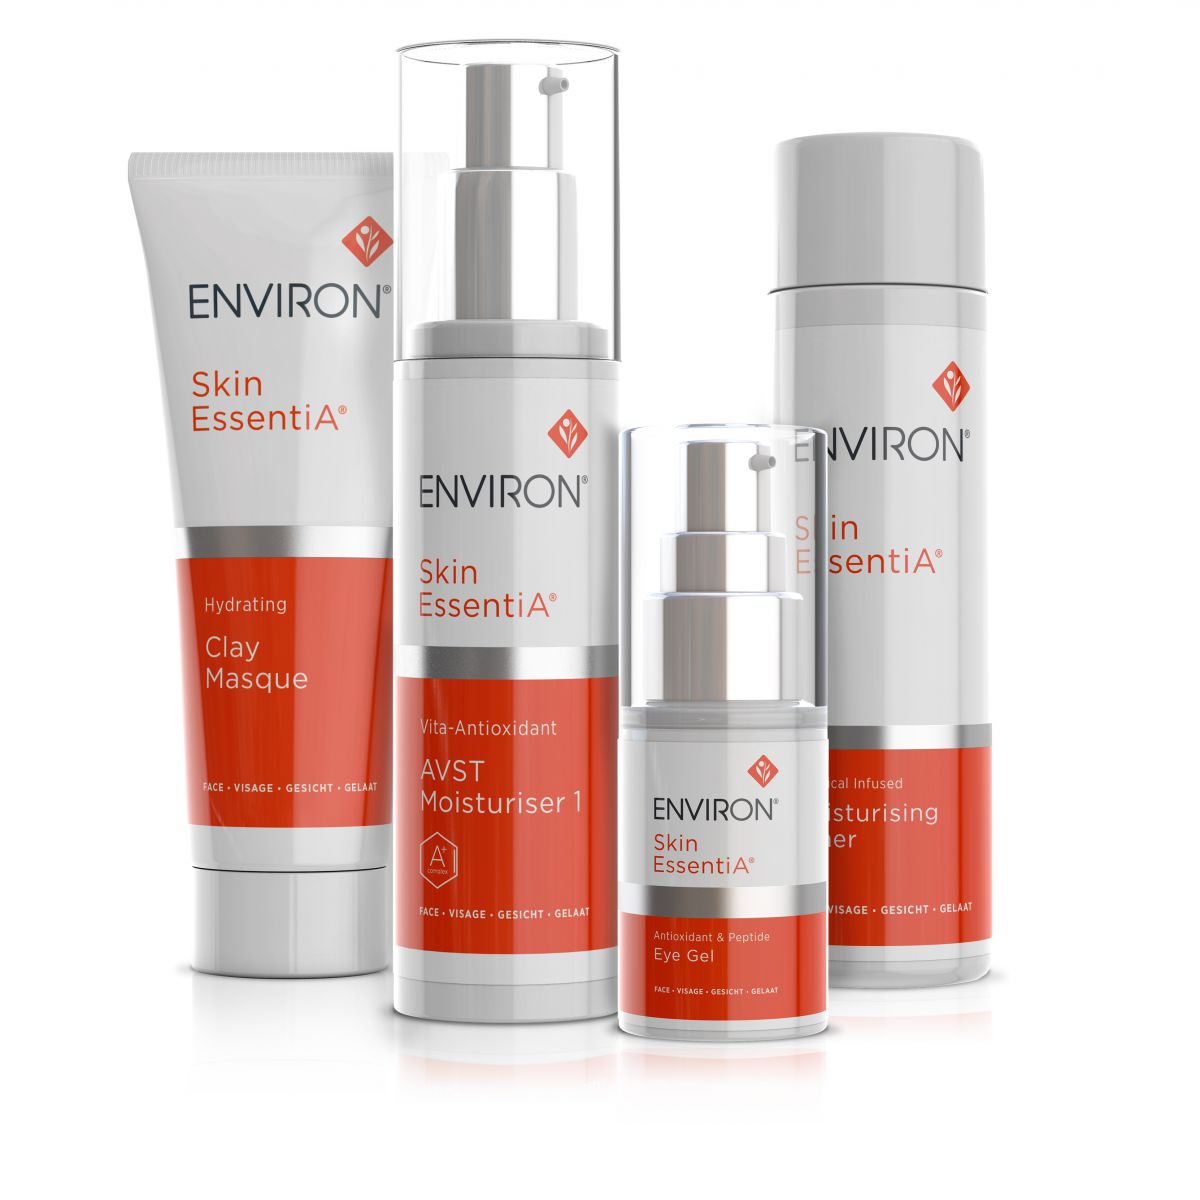 Environ Skin Range products